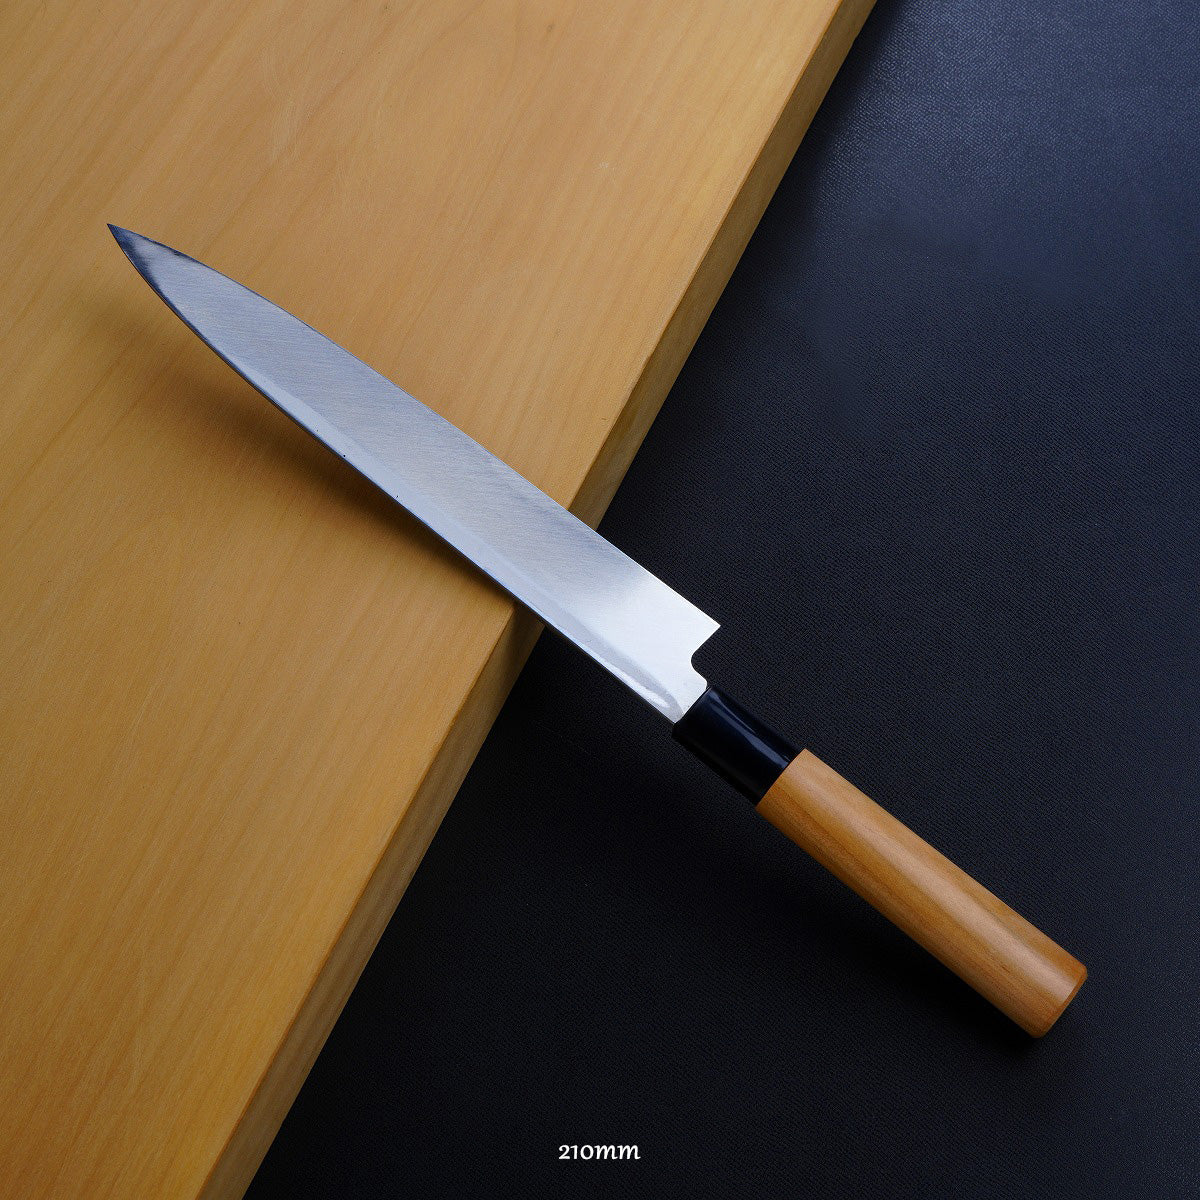 HONMAMON Yanagiba (Sashimi Knife) Shirogami steel No.2, 180mm~240mm for Left Hander